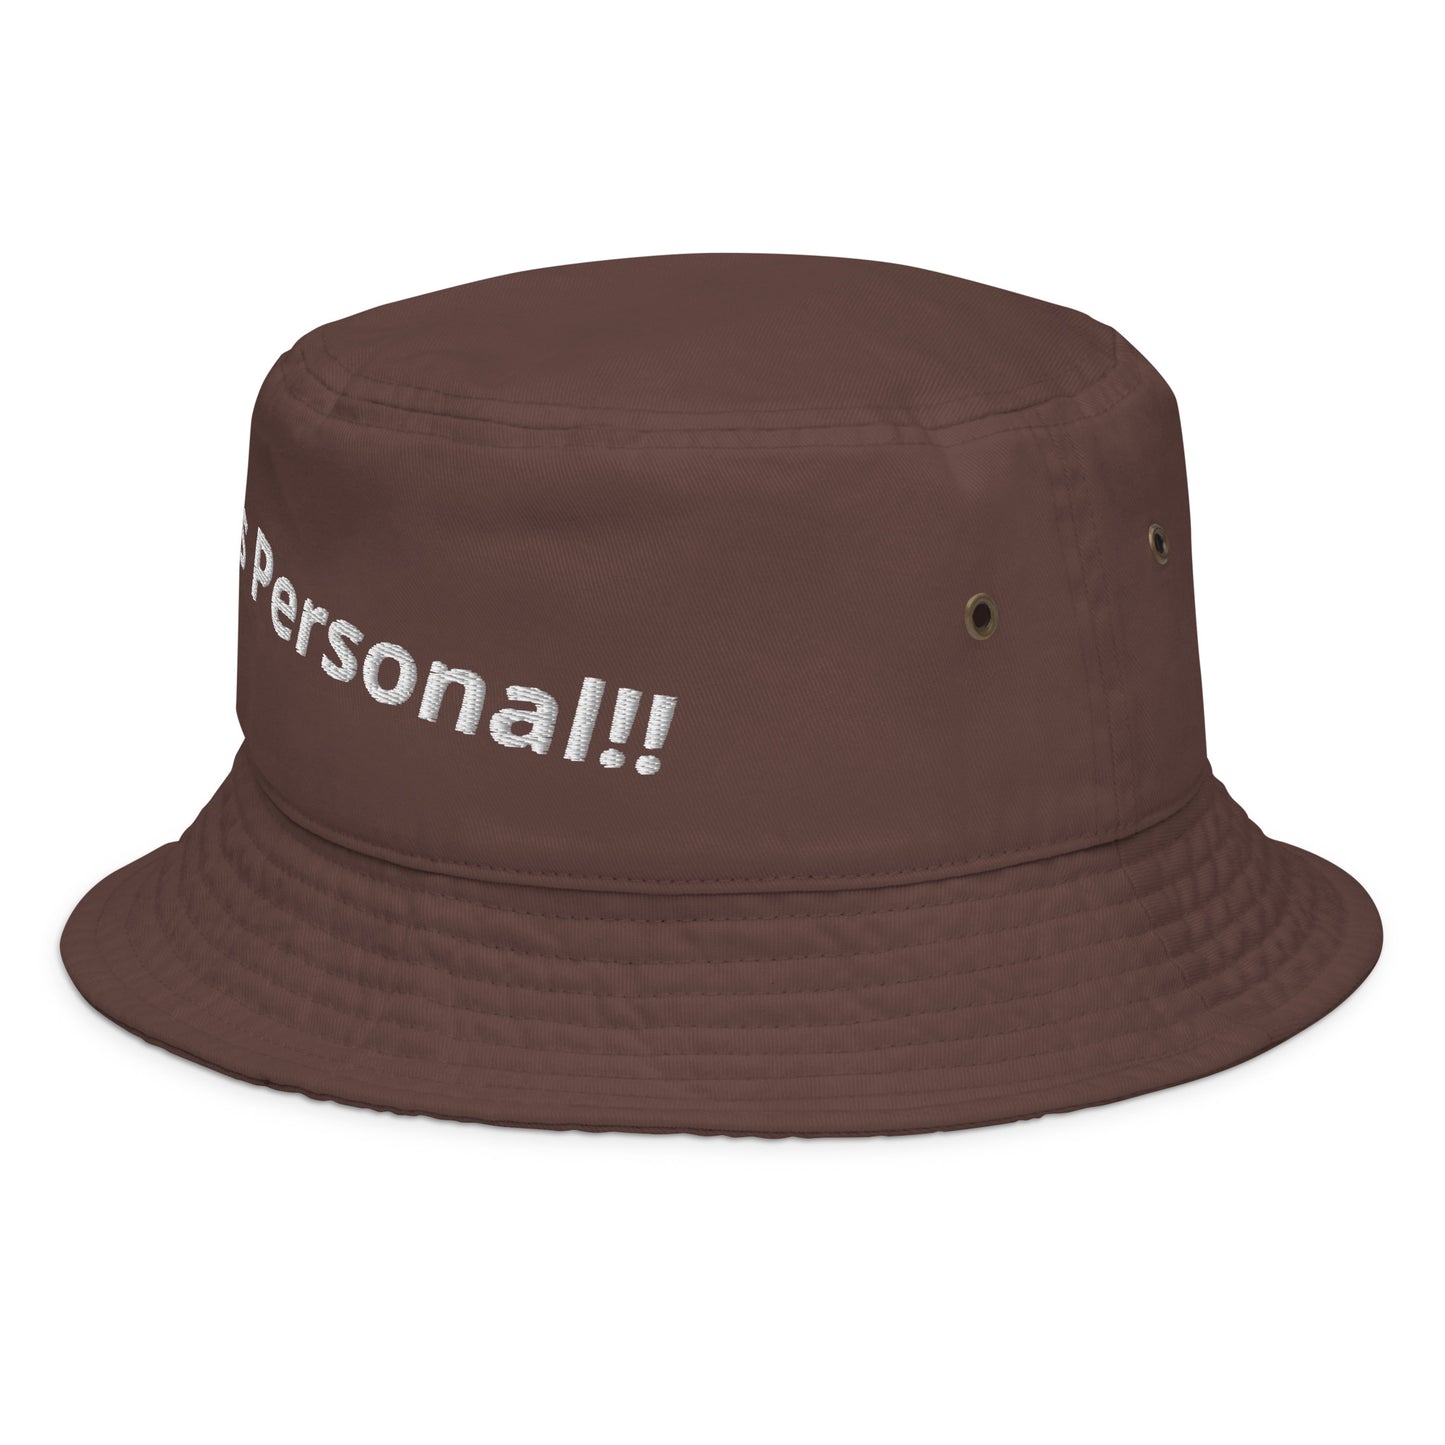 It's Personal!! Fashion bucket hat